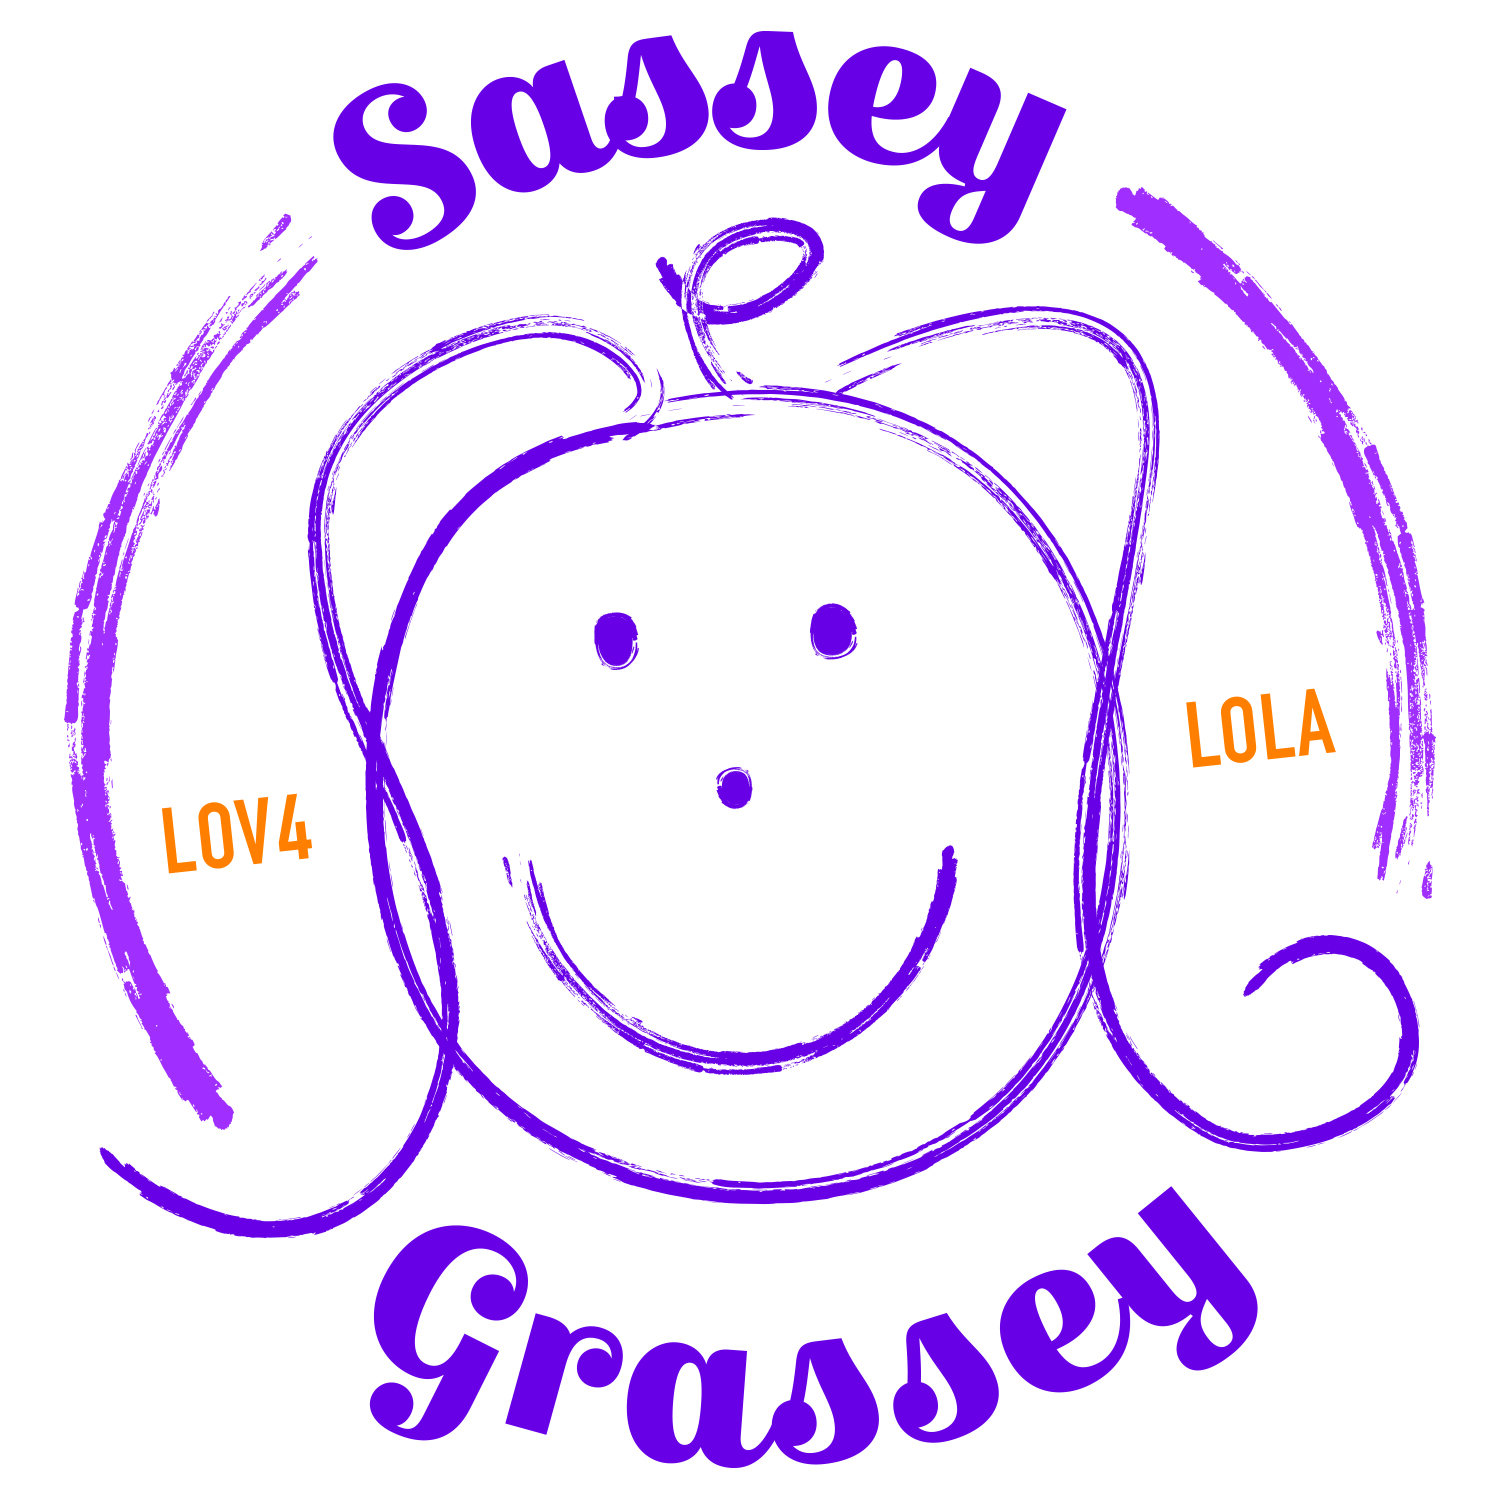 Sassey Grassey